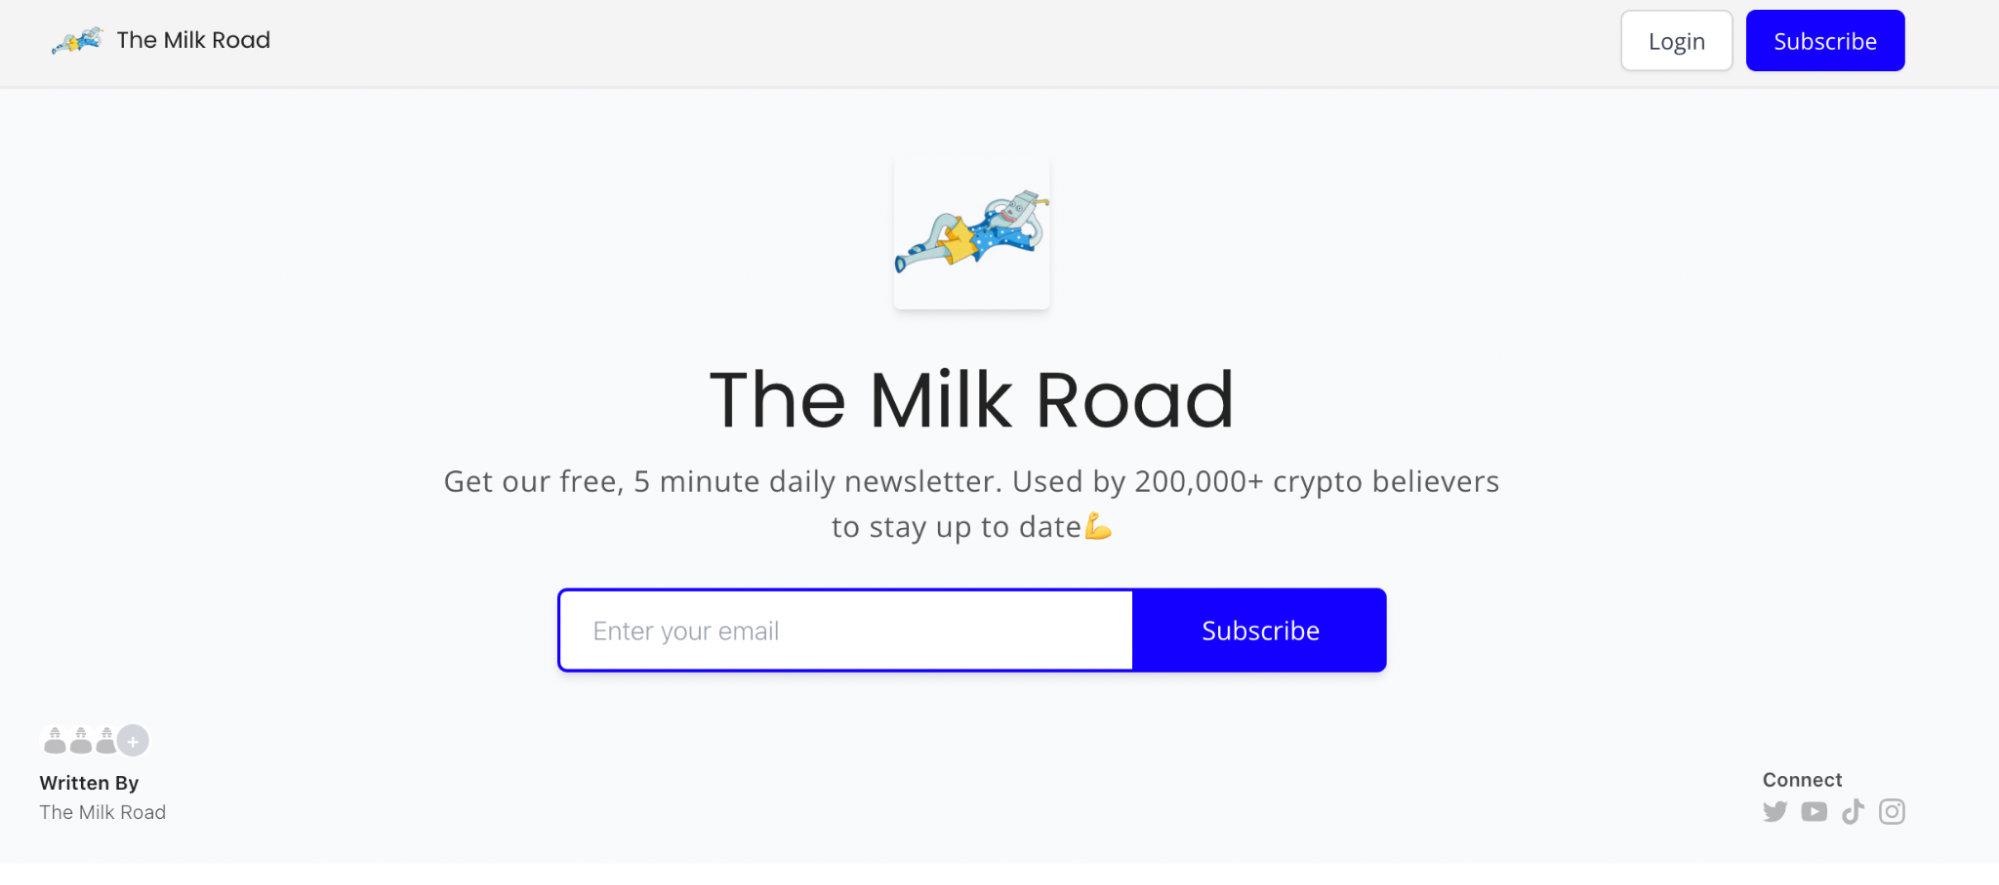 The Milk Road homepage